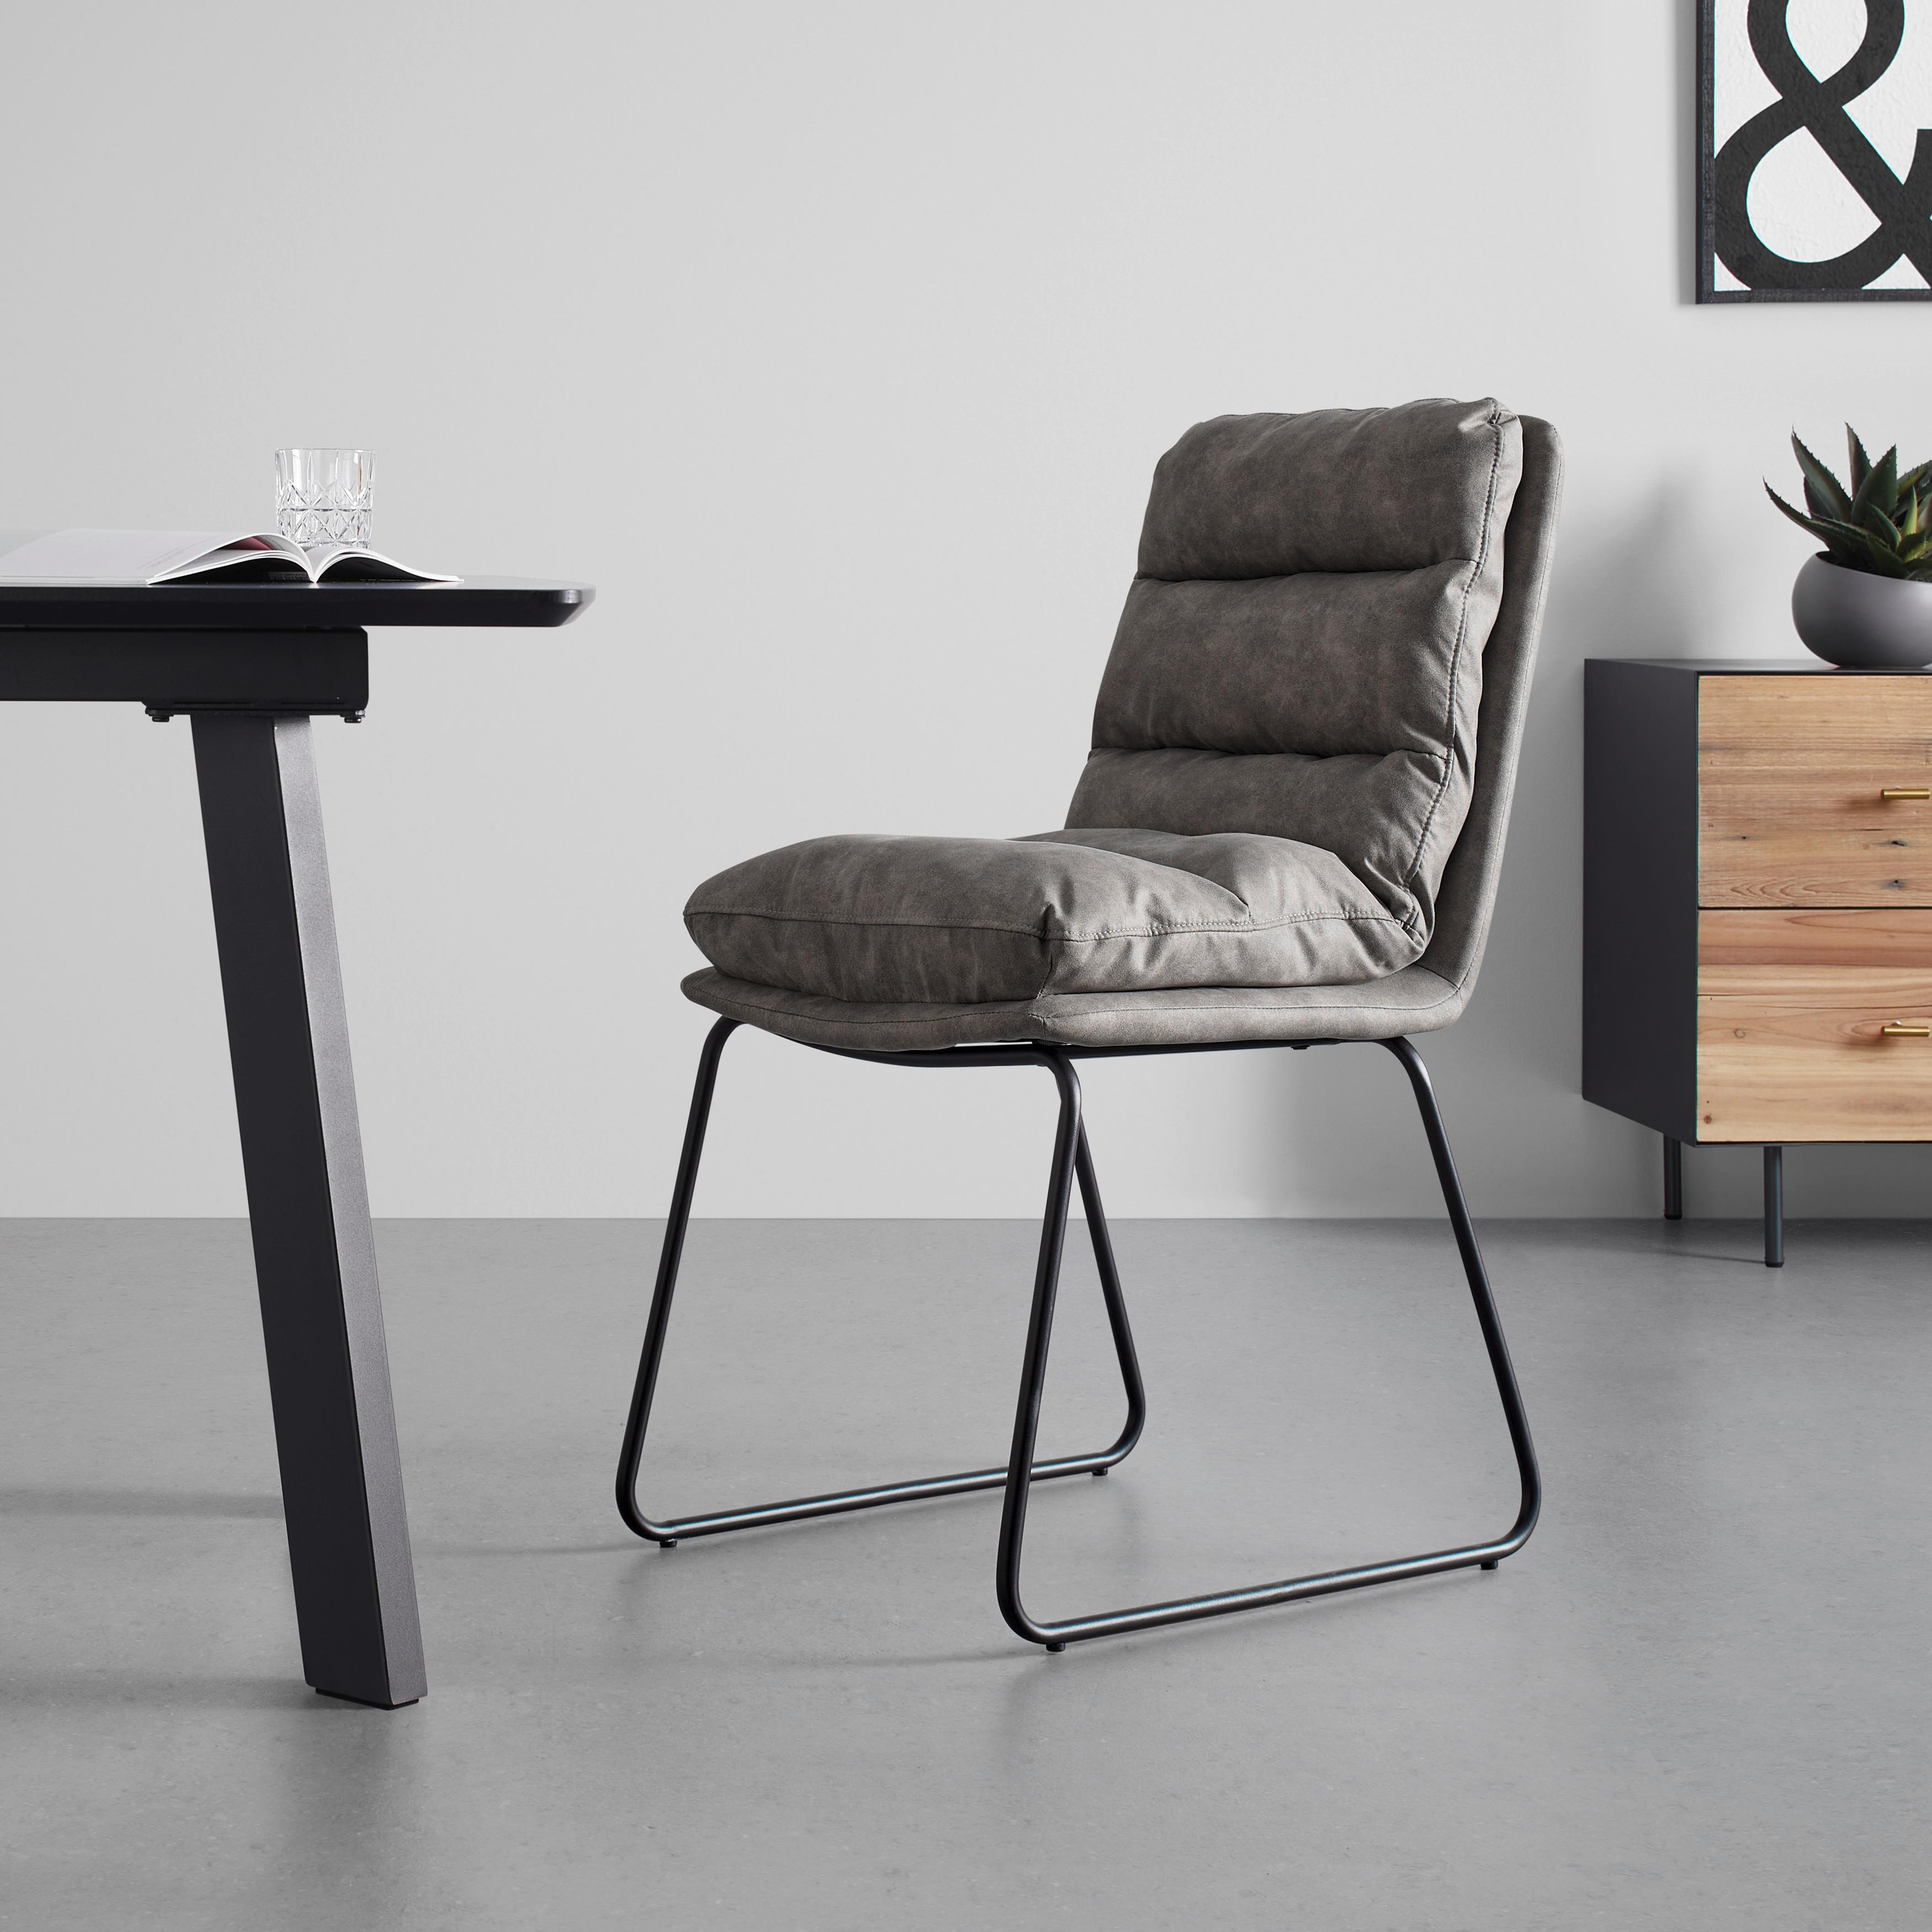 Stuhl "Kona", grau, Gepolstert - Schwarz/Grau, MODERN, Textil/Metall (48/90/65cm) - Bessagi Home